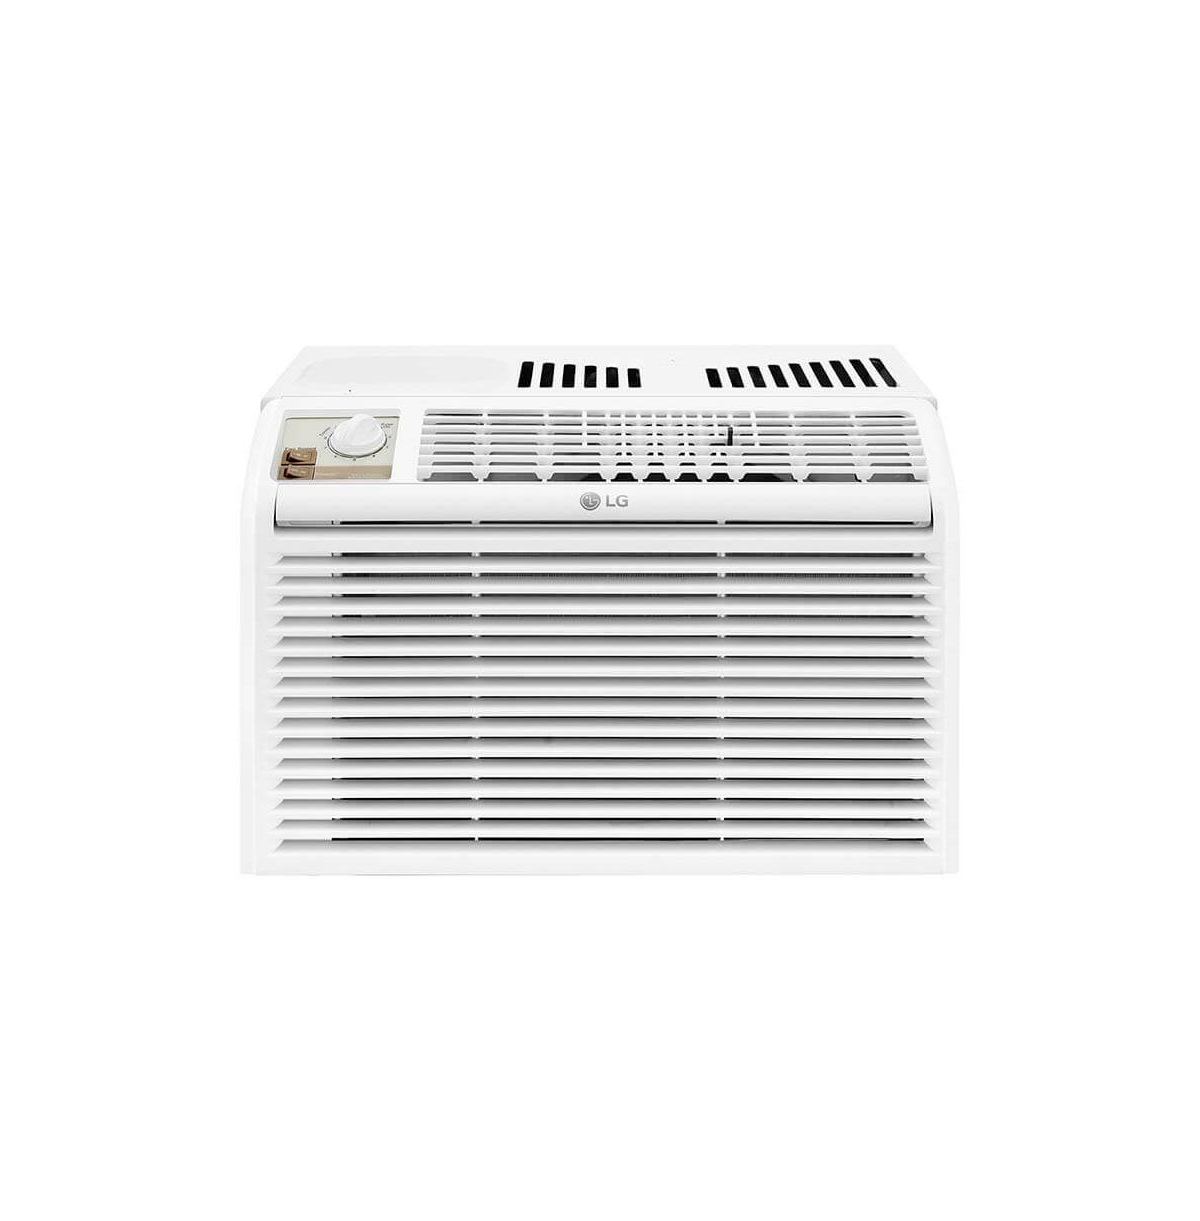 Lg 5,000 Btu Window Air Conditioner